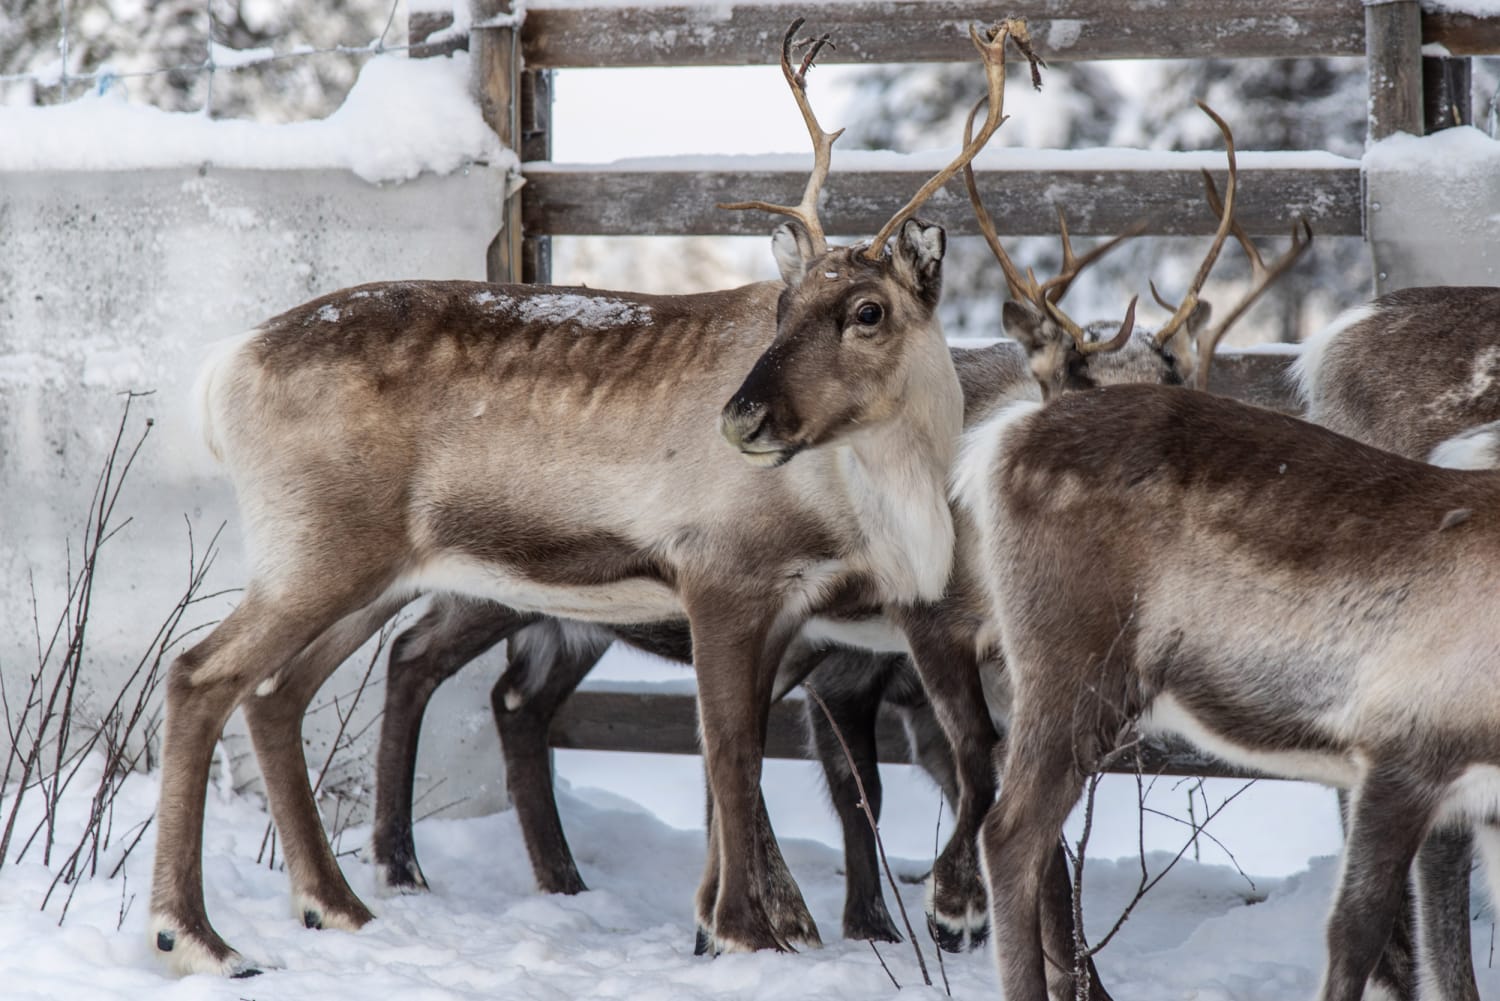 Climate change threatens reindeer food supplies in Sweden's Arctic